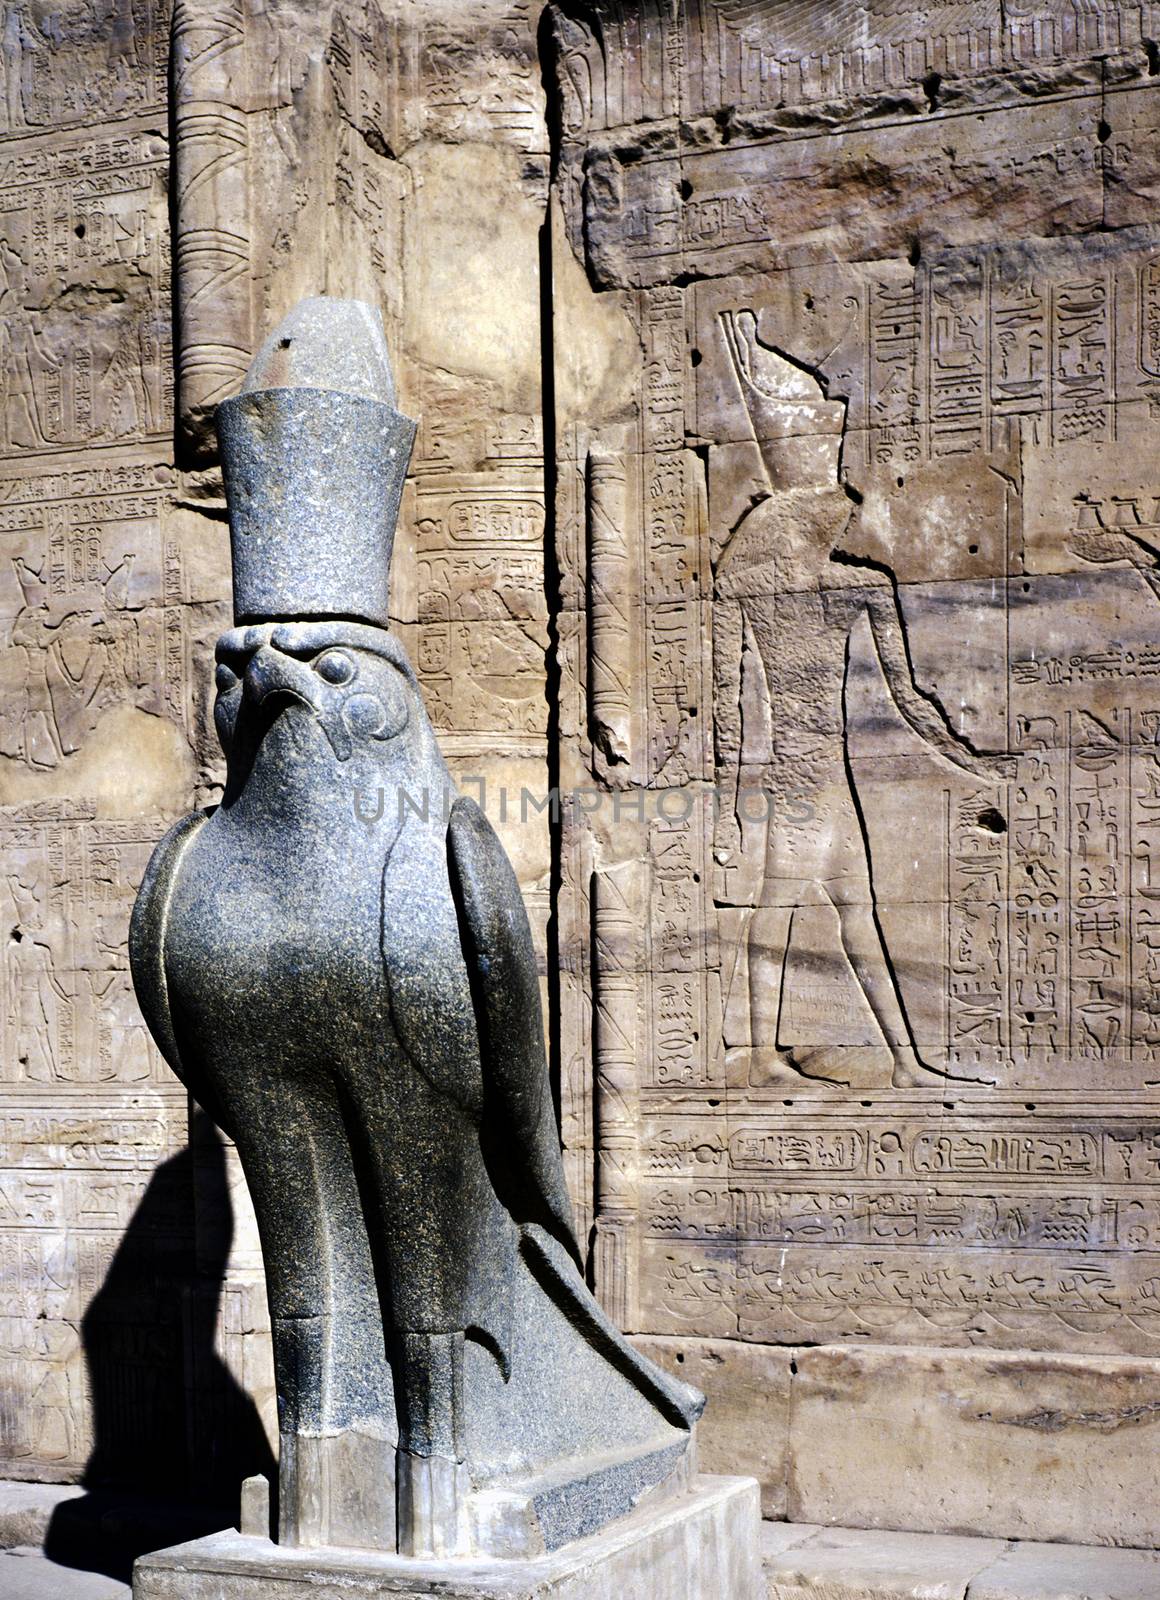 Temple of Horus, Edfu by jol66